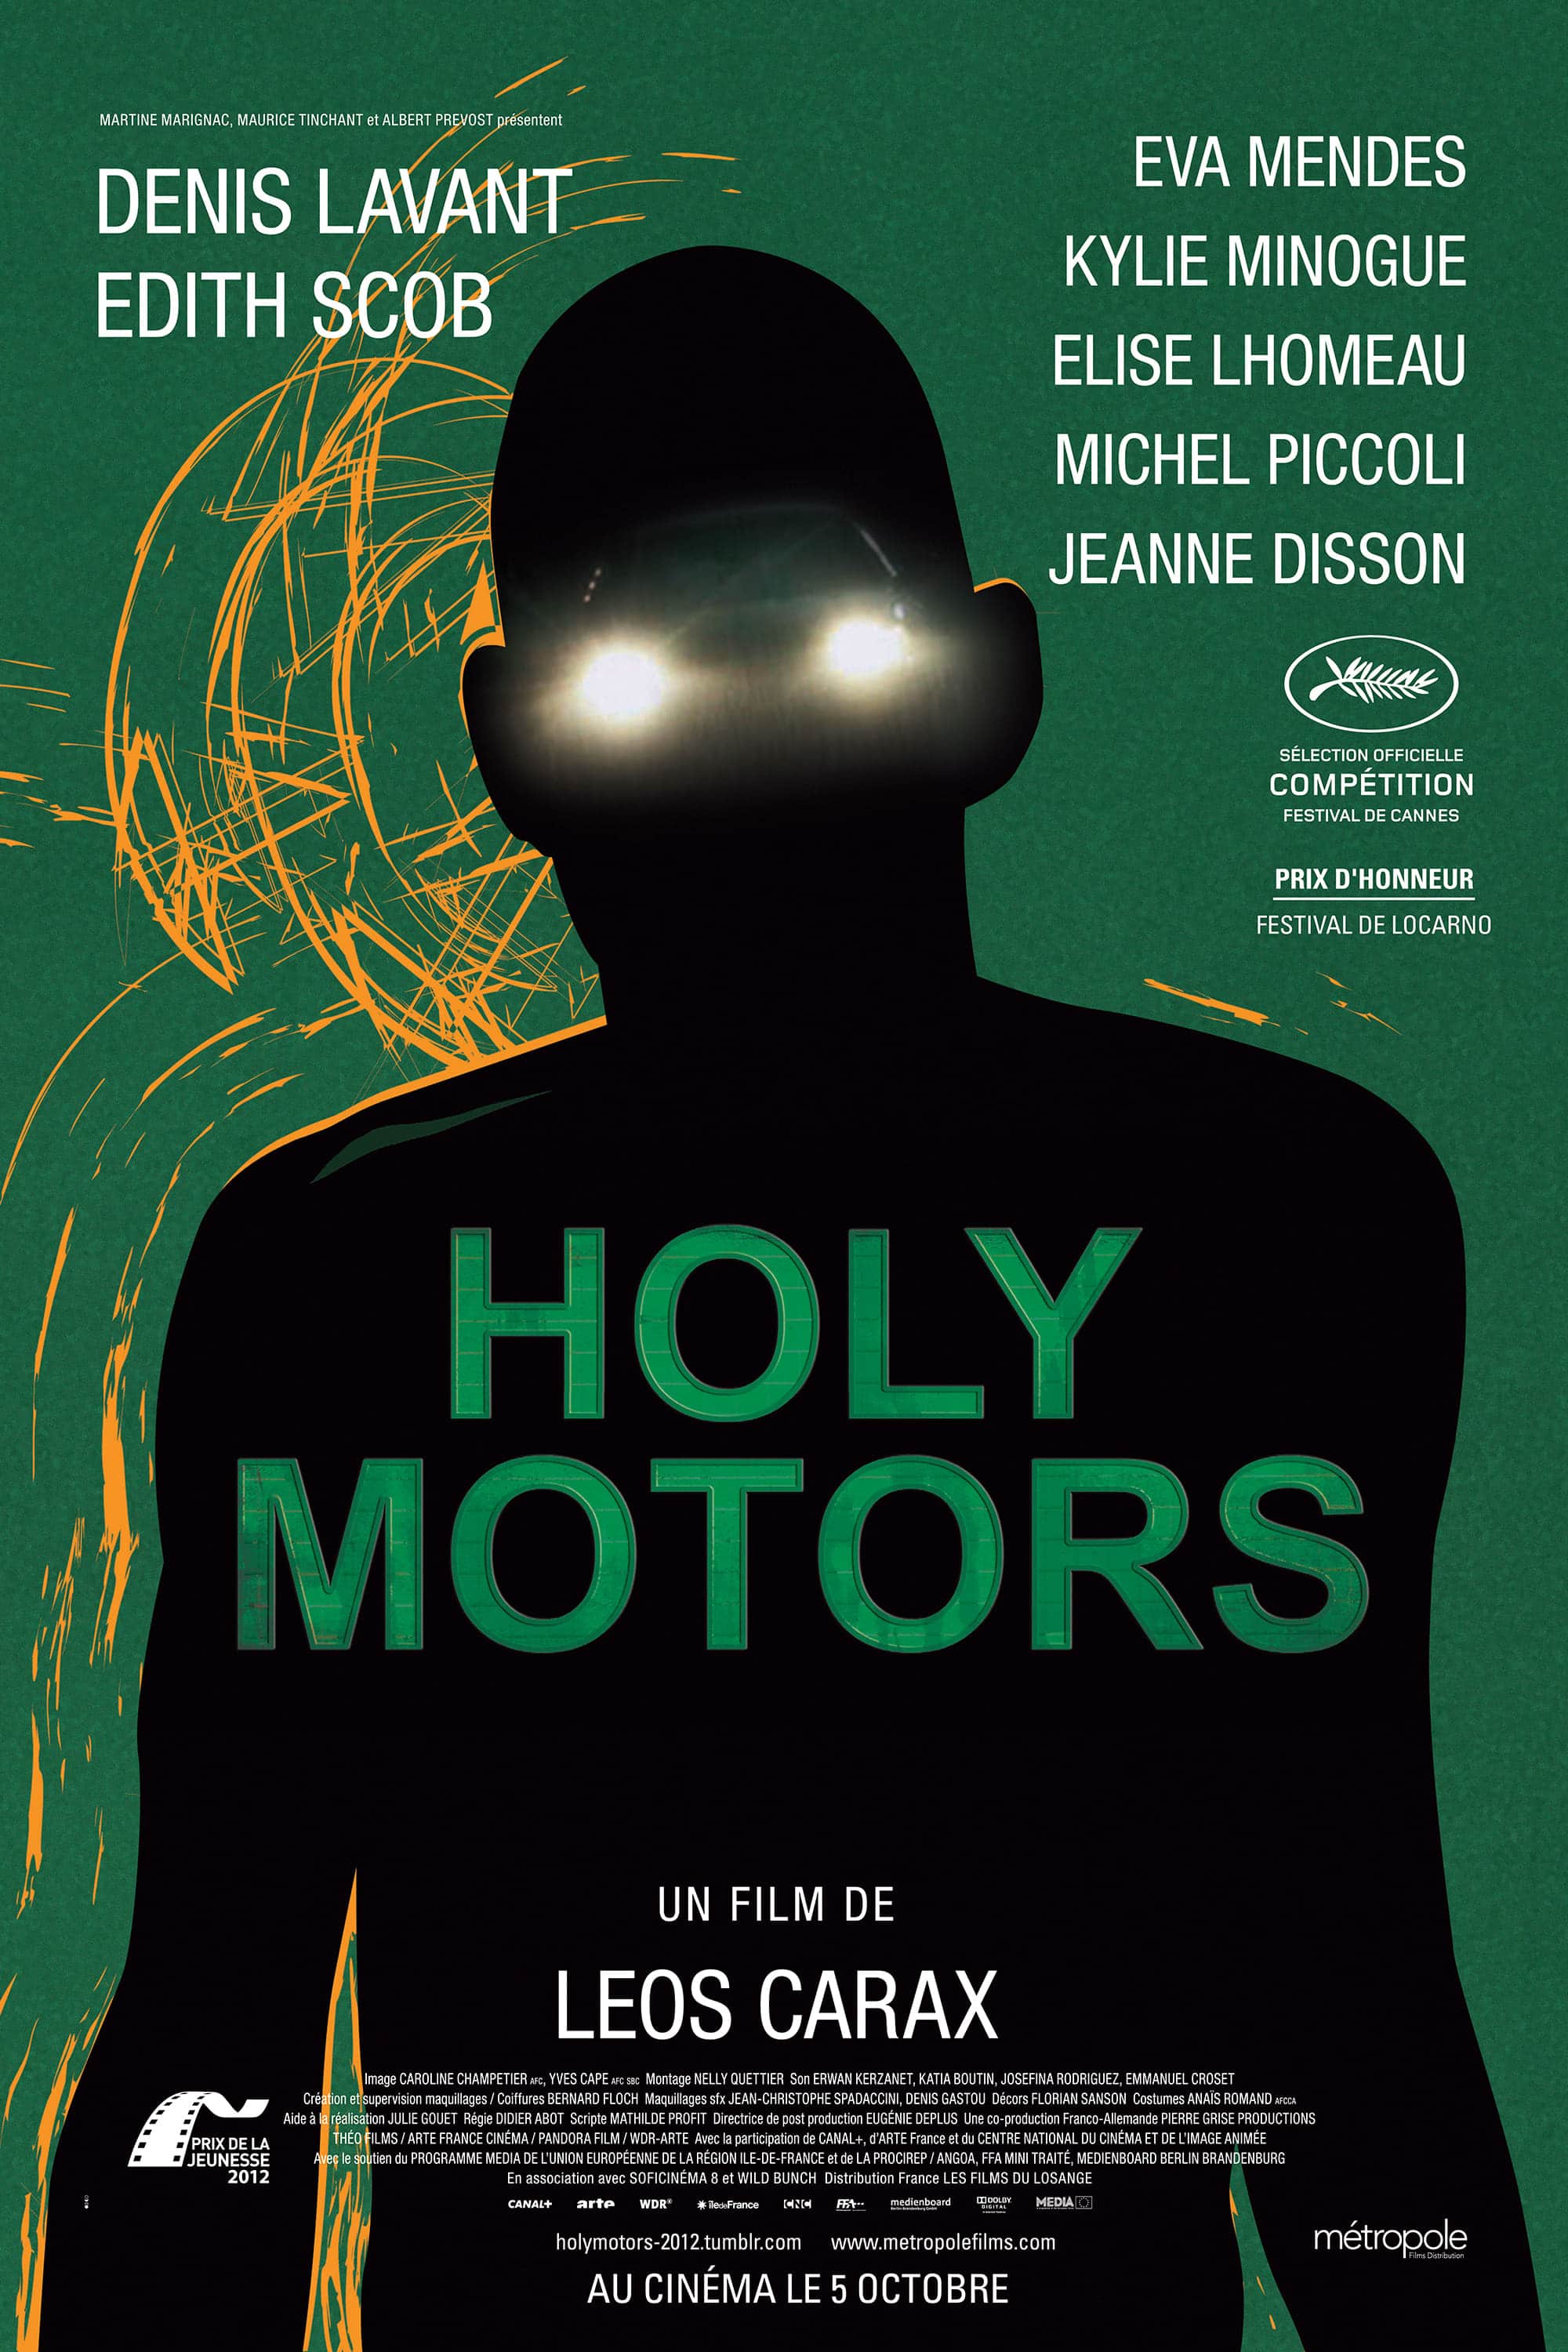 Plakat von "Holy Motors"